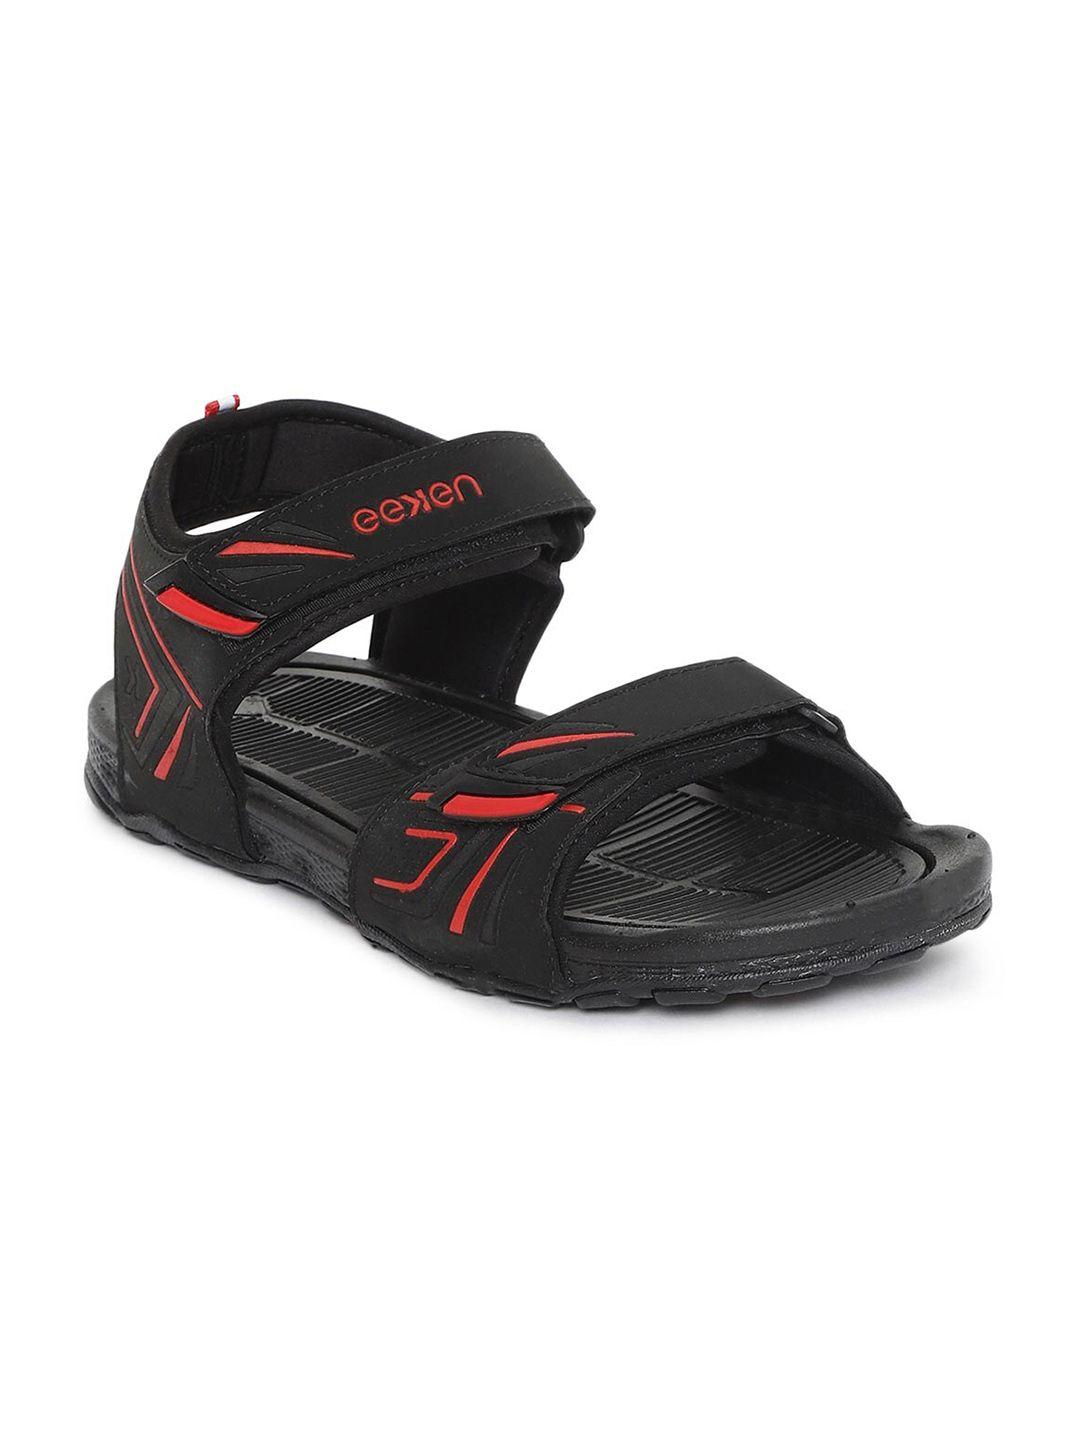 paragon-men-eeken-anti-skid-sole-and-lightweight-sport-sandals